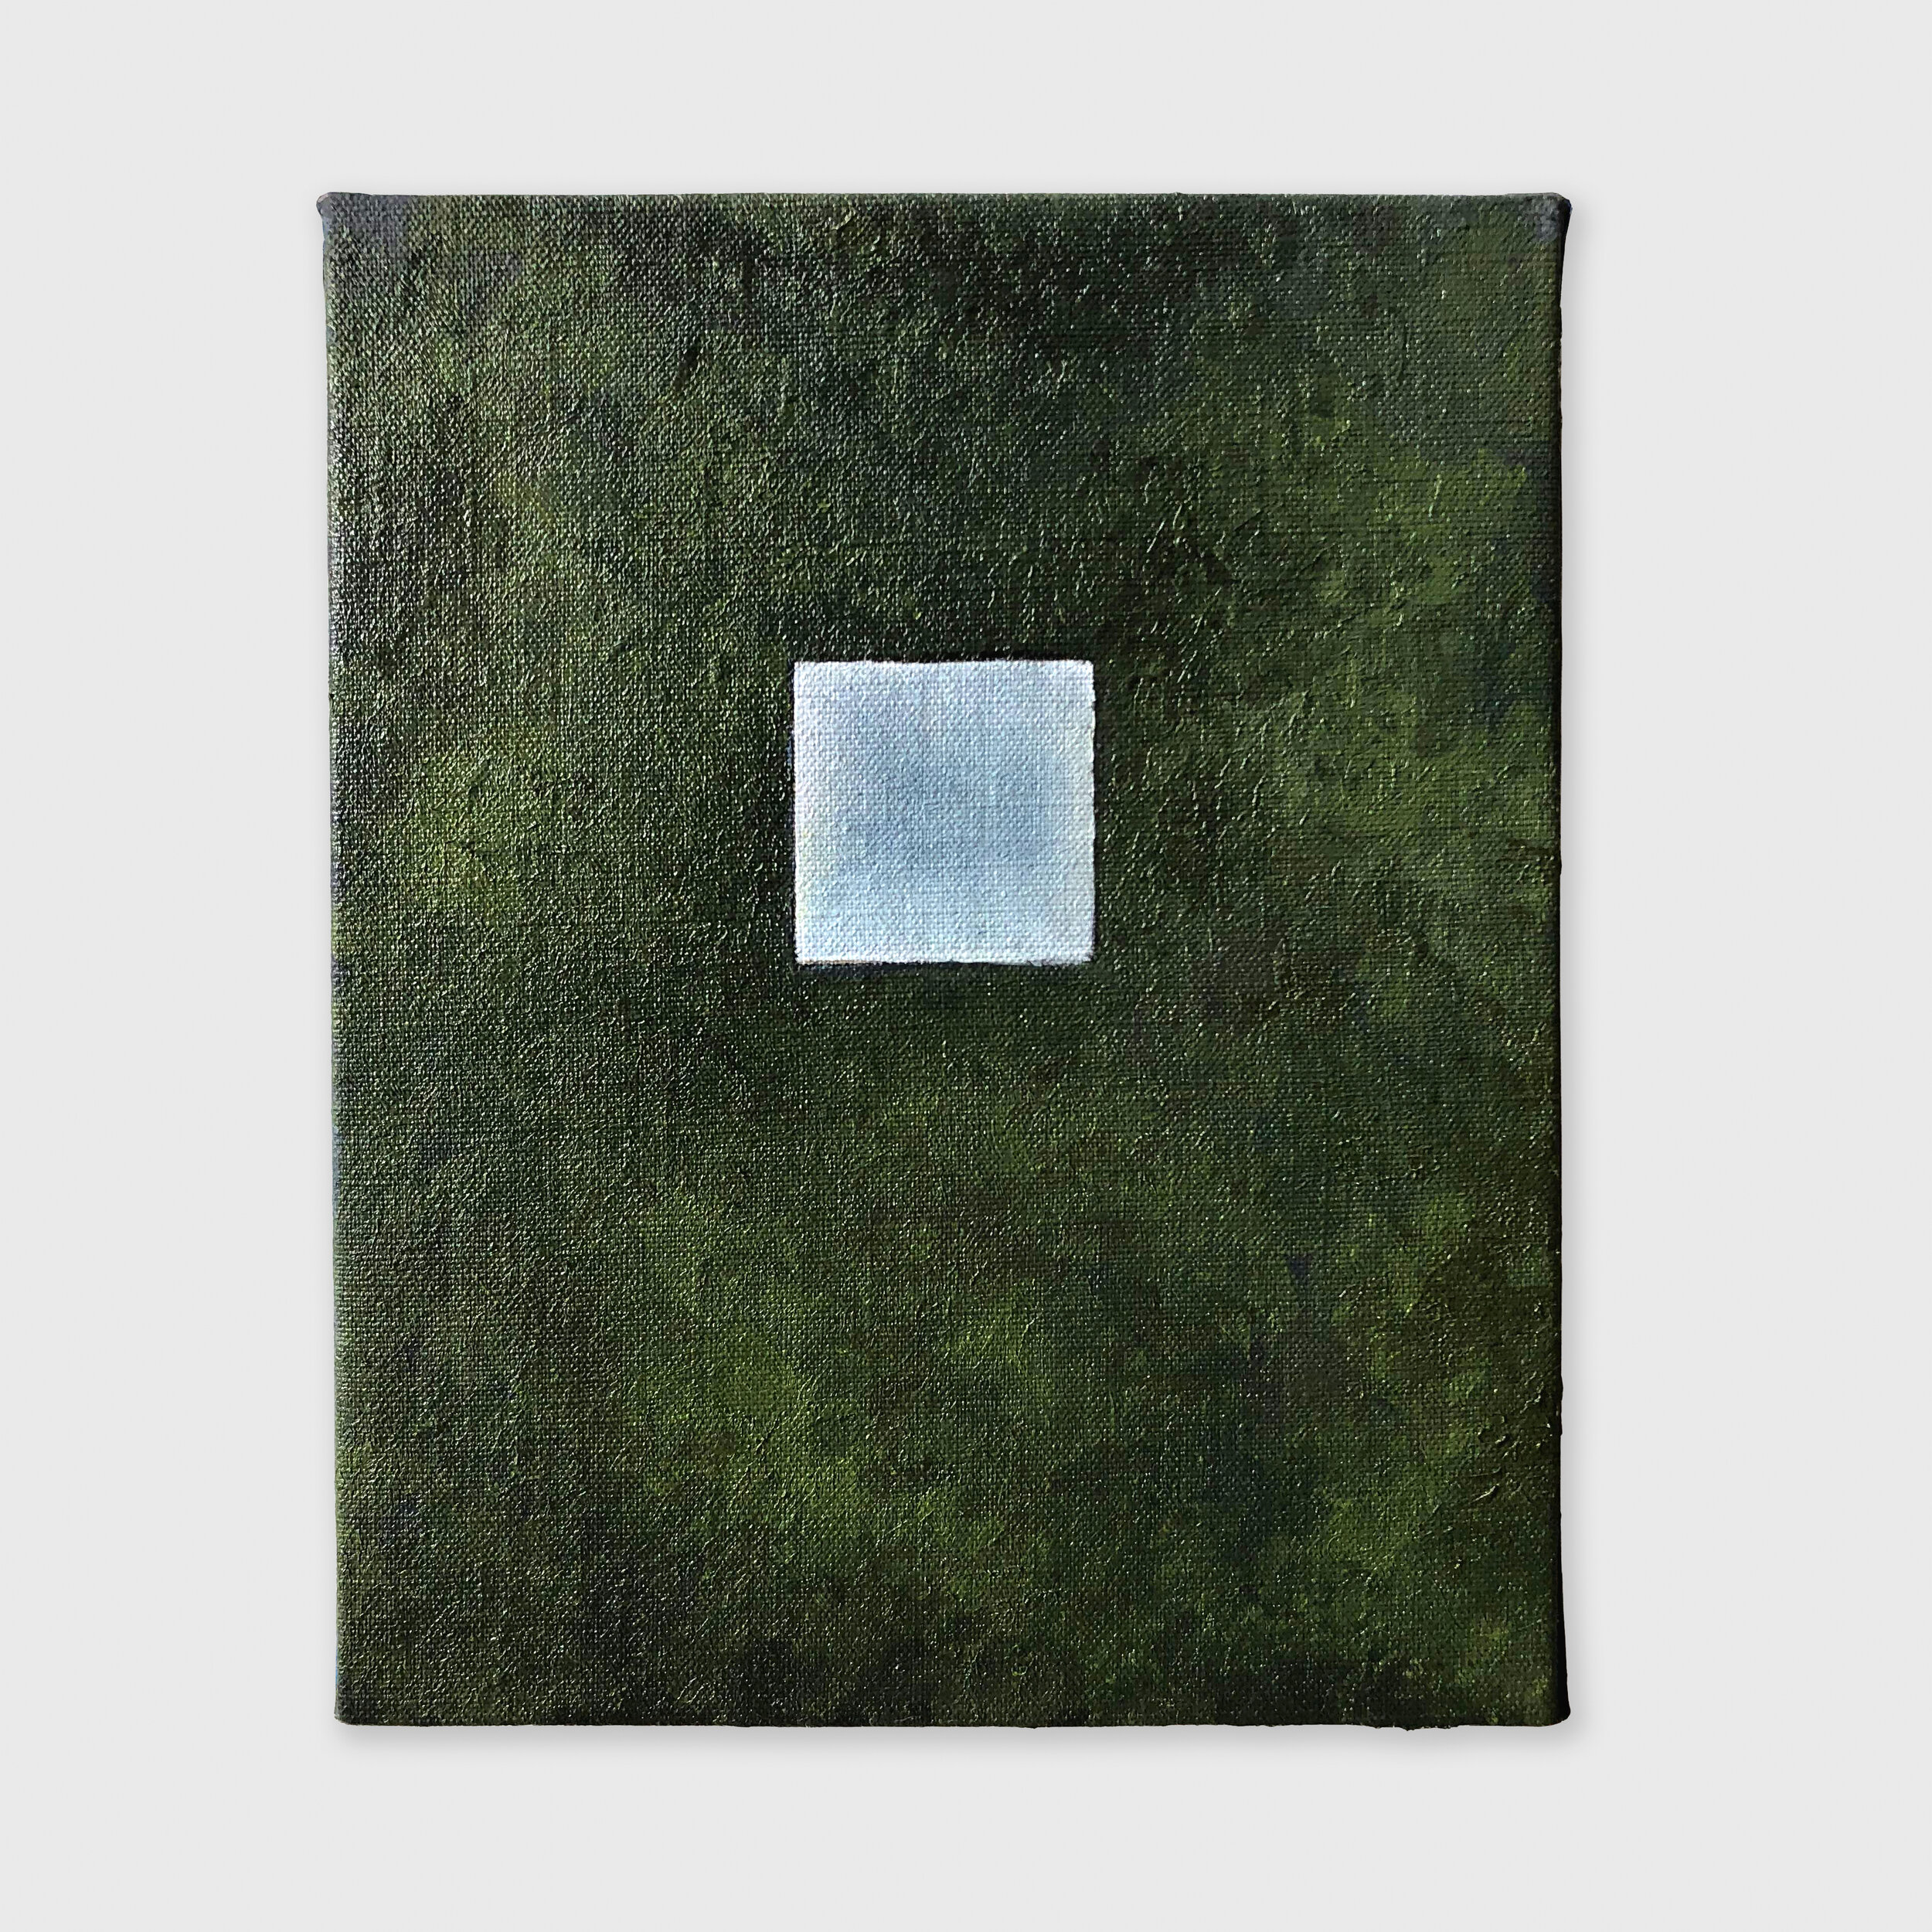 Untitled (Window 54), 2020 